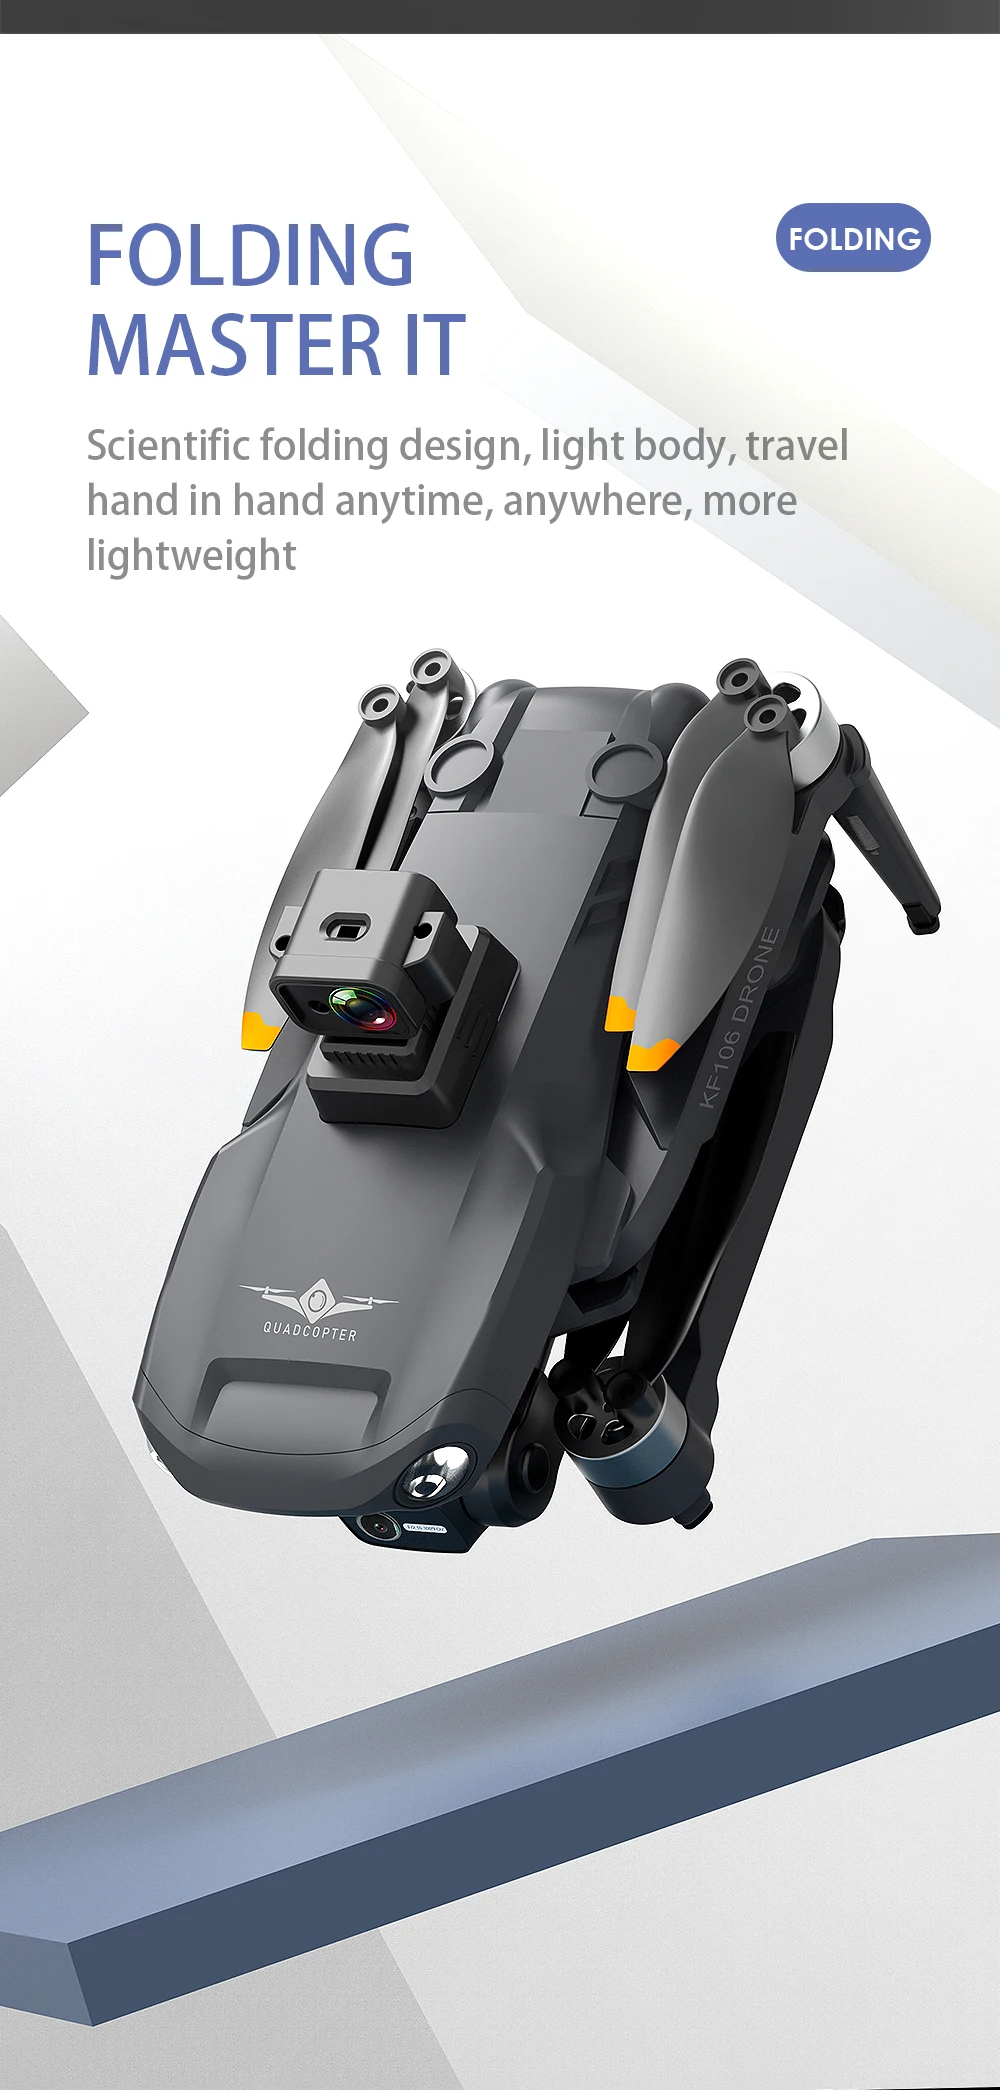 KF106 GPS Drone, FOLDING MASTER IT Scientific folding design, light body, travel hand in hand anytime,